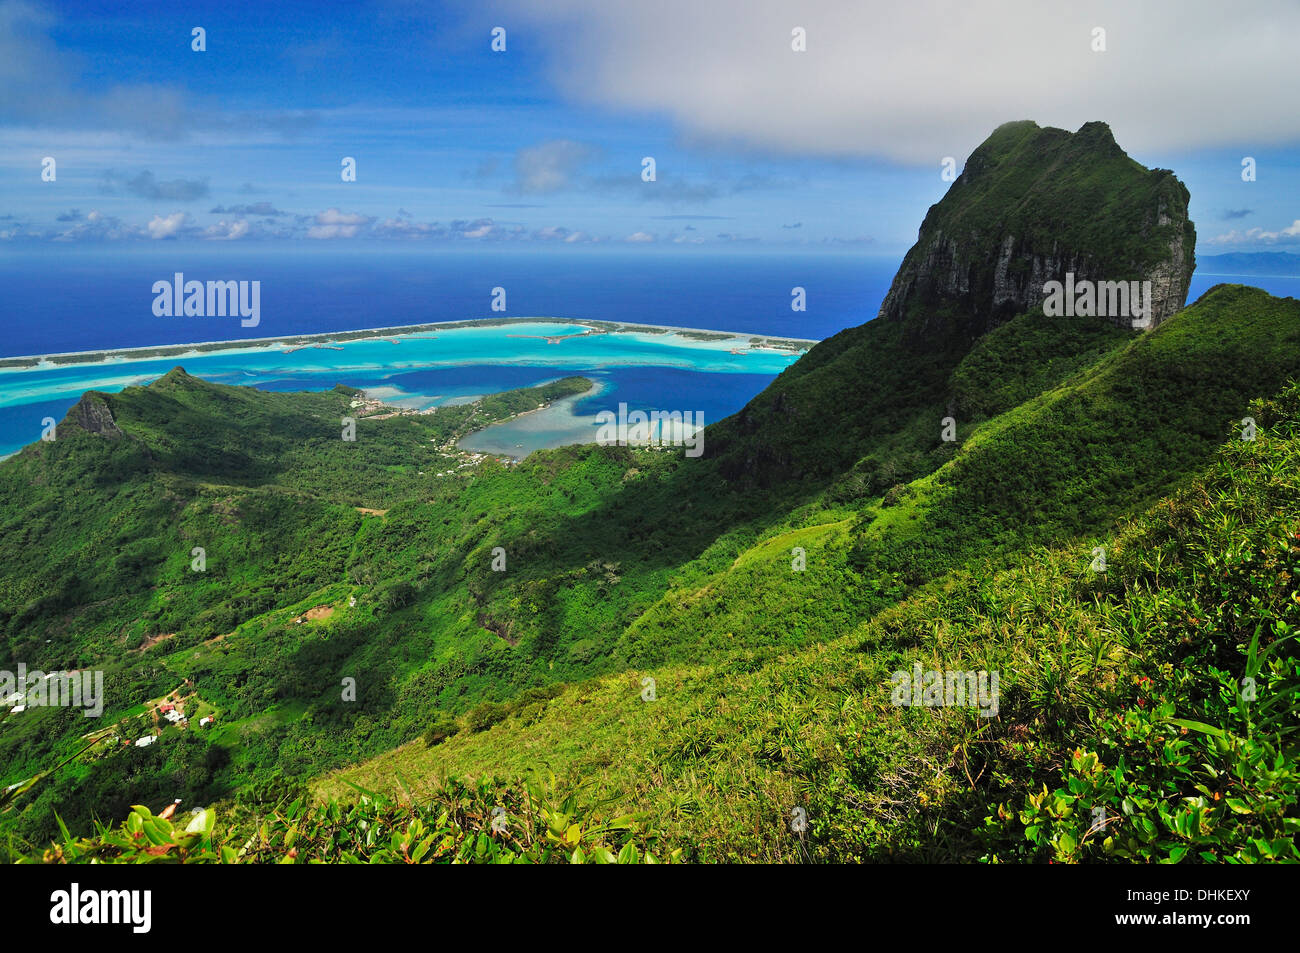 View towards the riff, Motu and Mount Otemanu from Mount Pahia, Bora Bora, Society Islands, French Polynesia, Windward Islands, Stock Photo